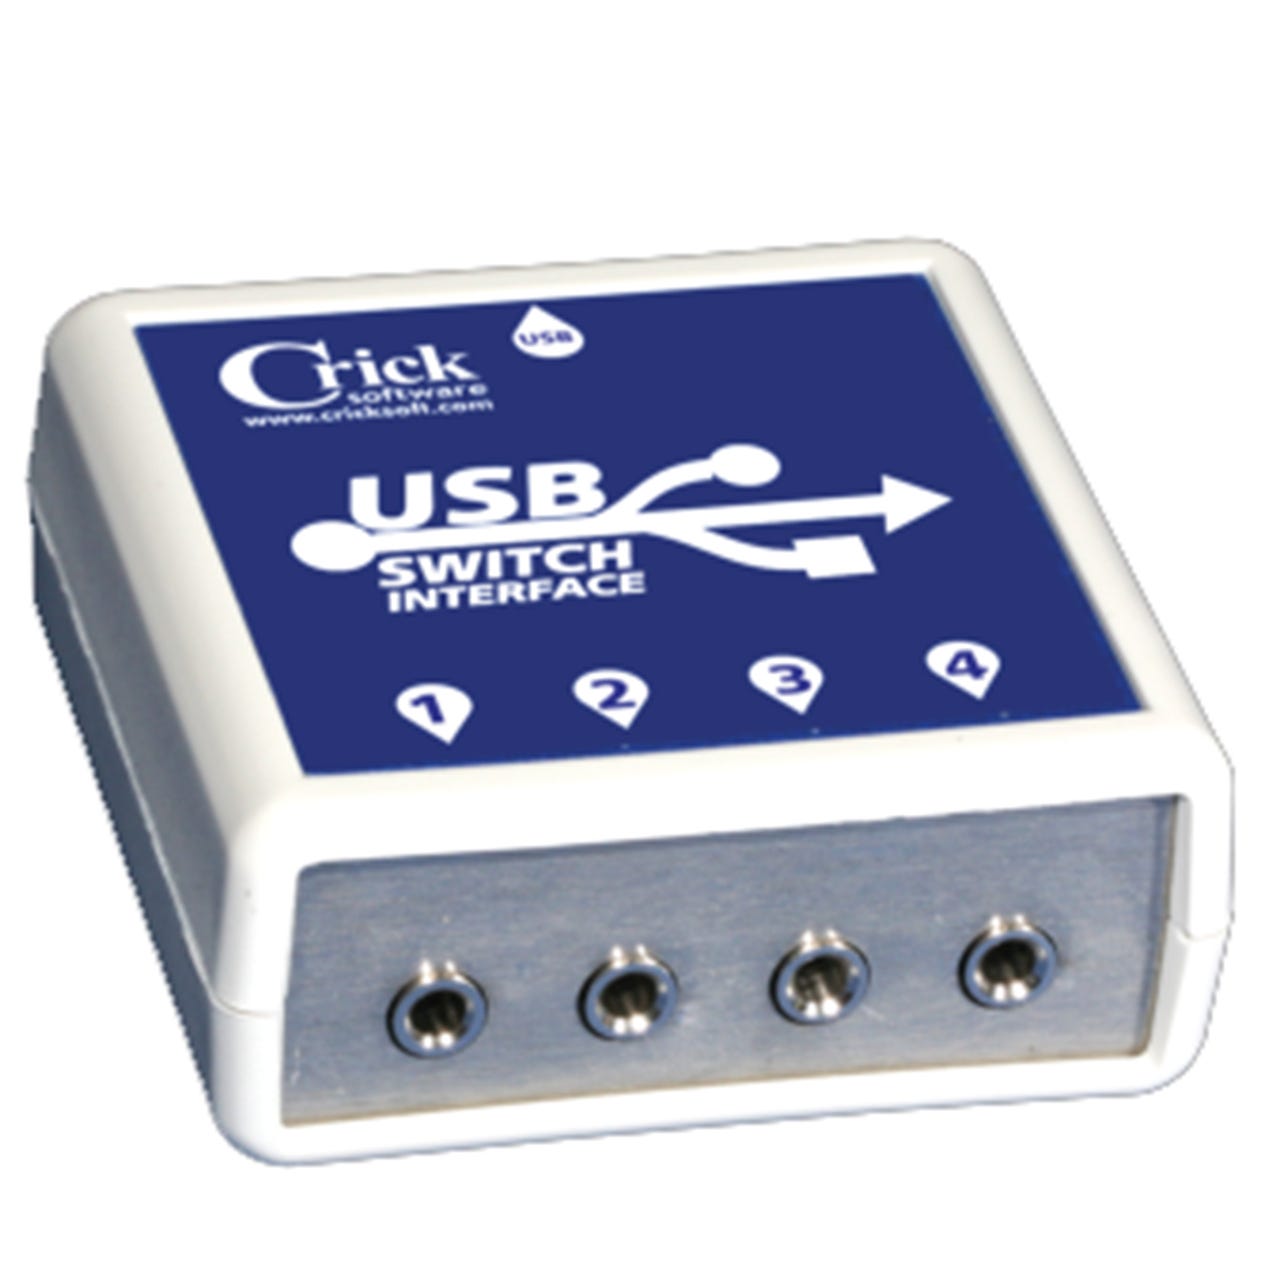 Crick USB Switch Interface